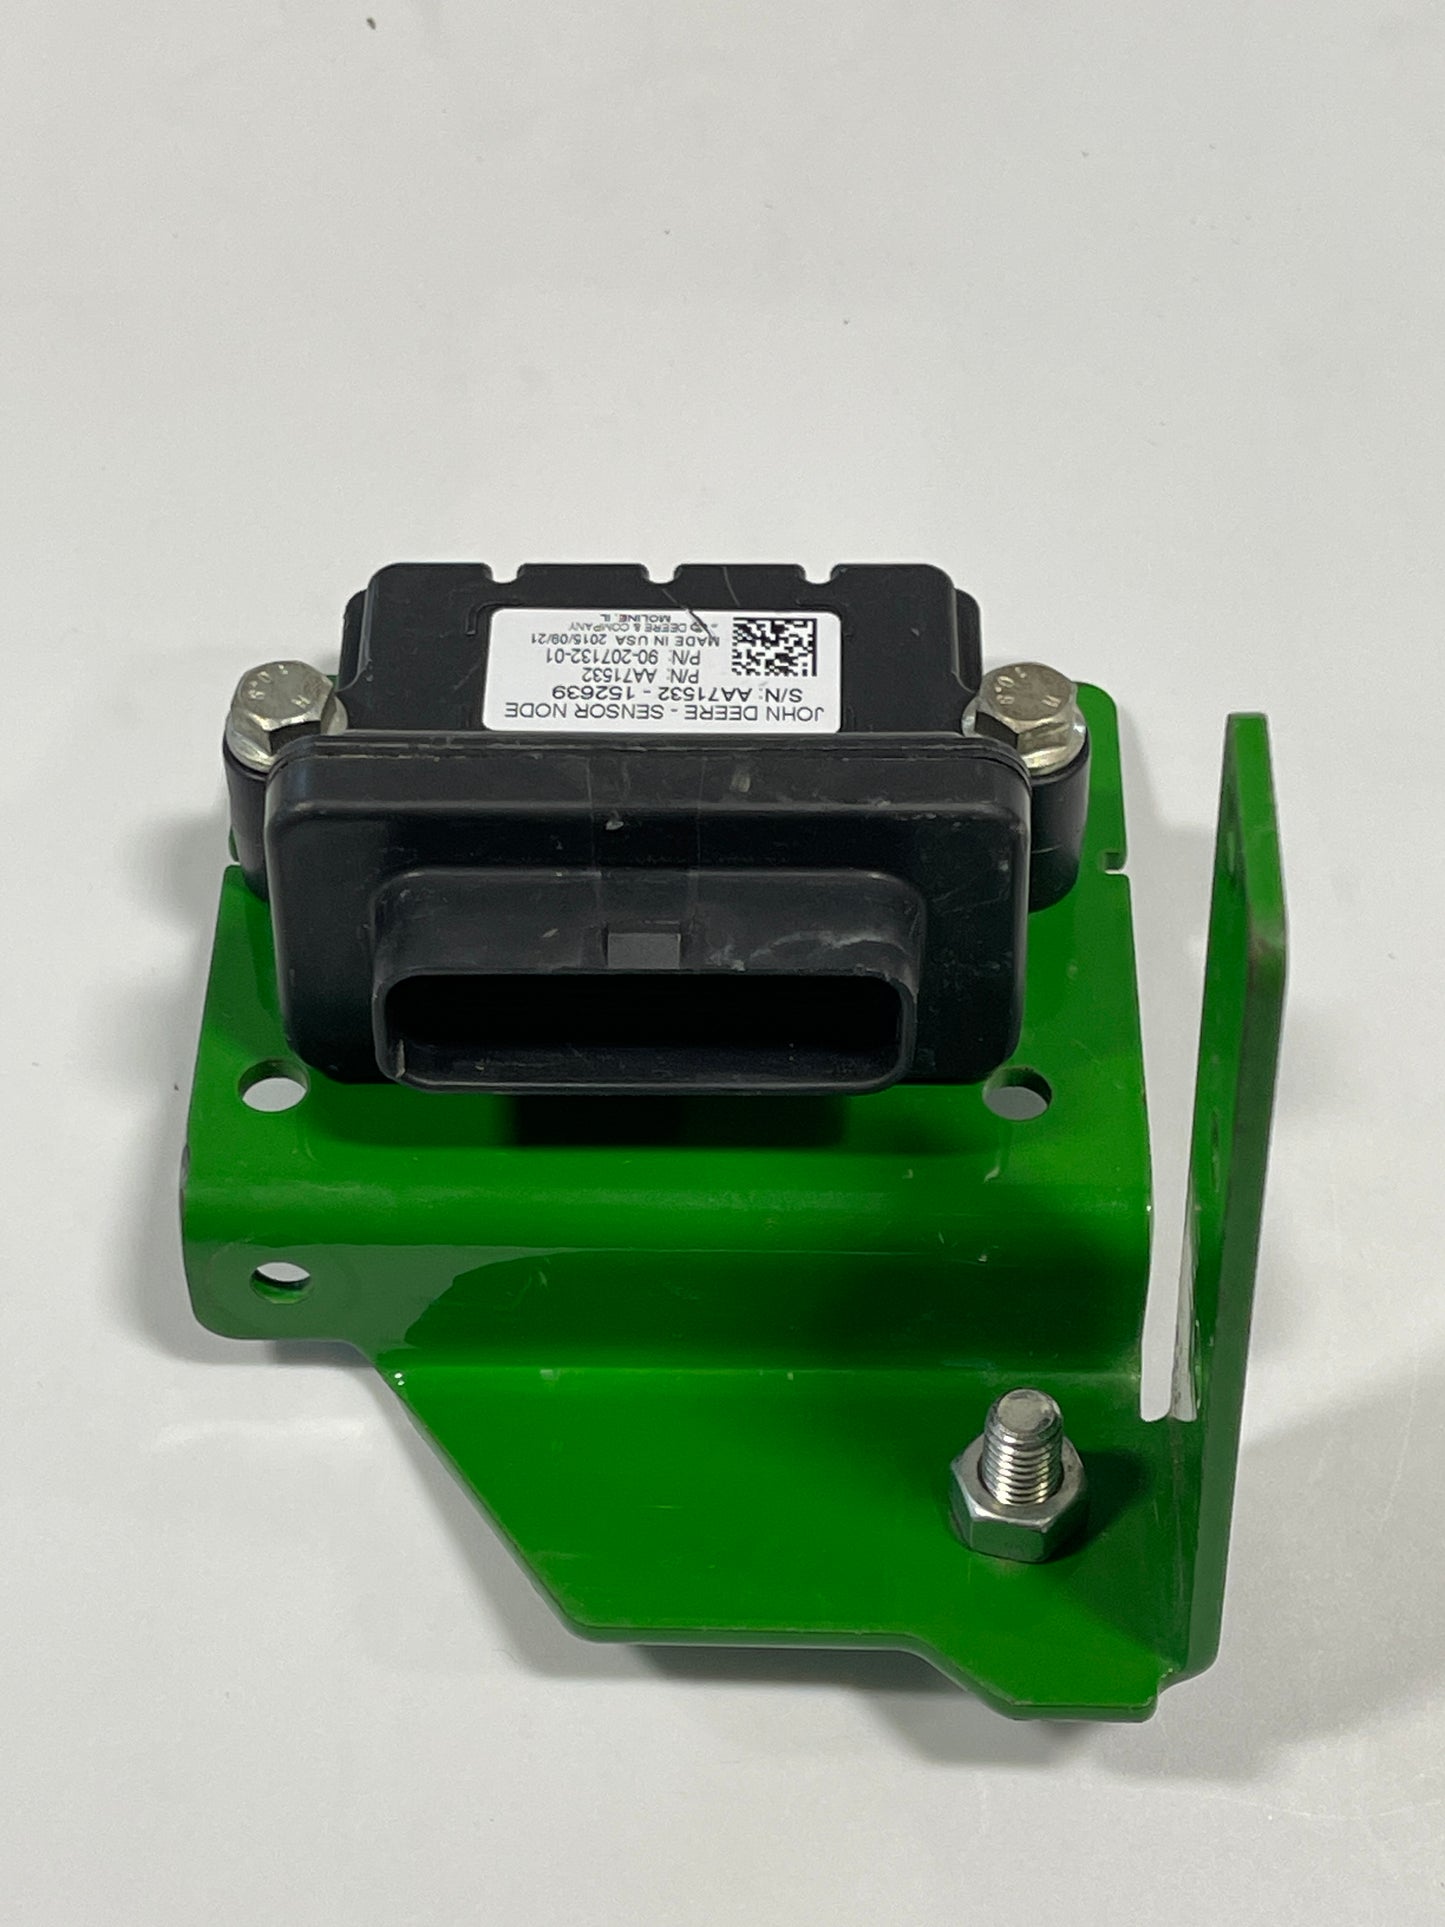 AA71532 -  John Deere Downforce Sensor Node Controller